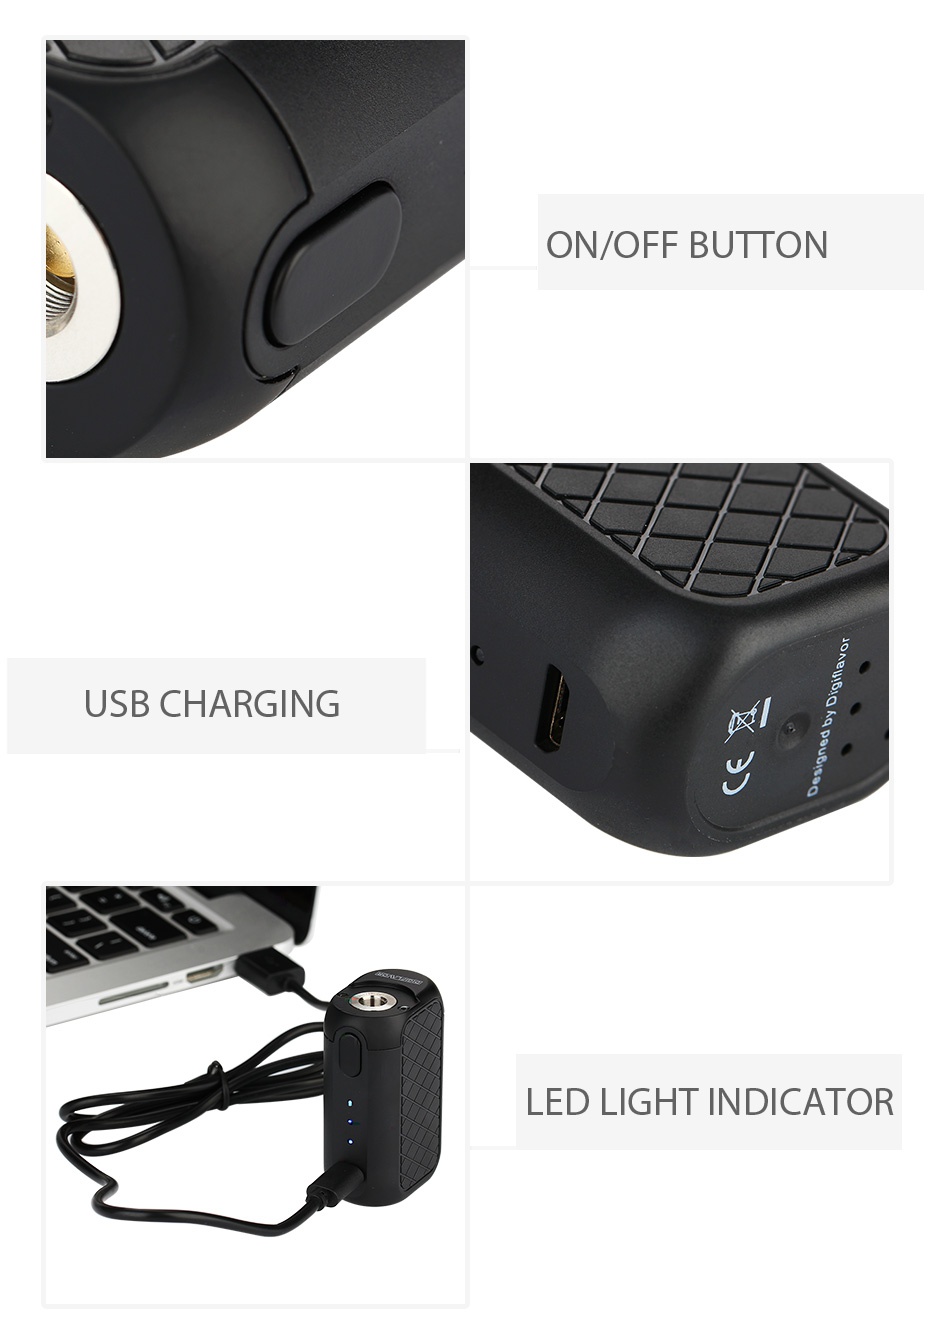 Digiflavor Ubox MOD 1700mAh ON OFF BUTTON USB CHARGING HiB ED LIGHT INDICATOR